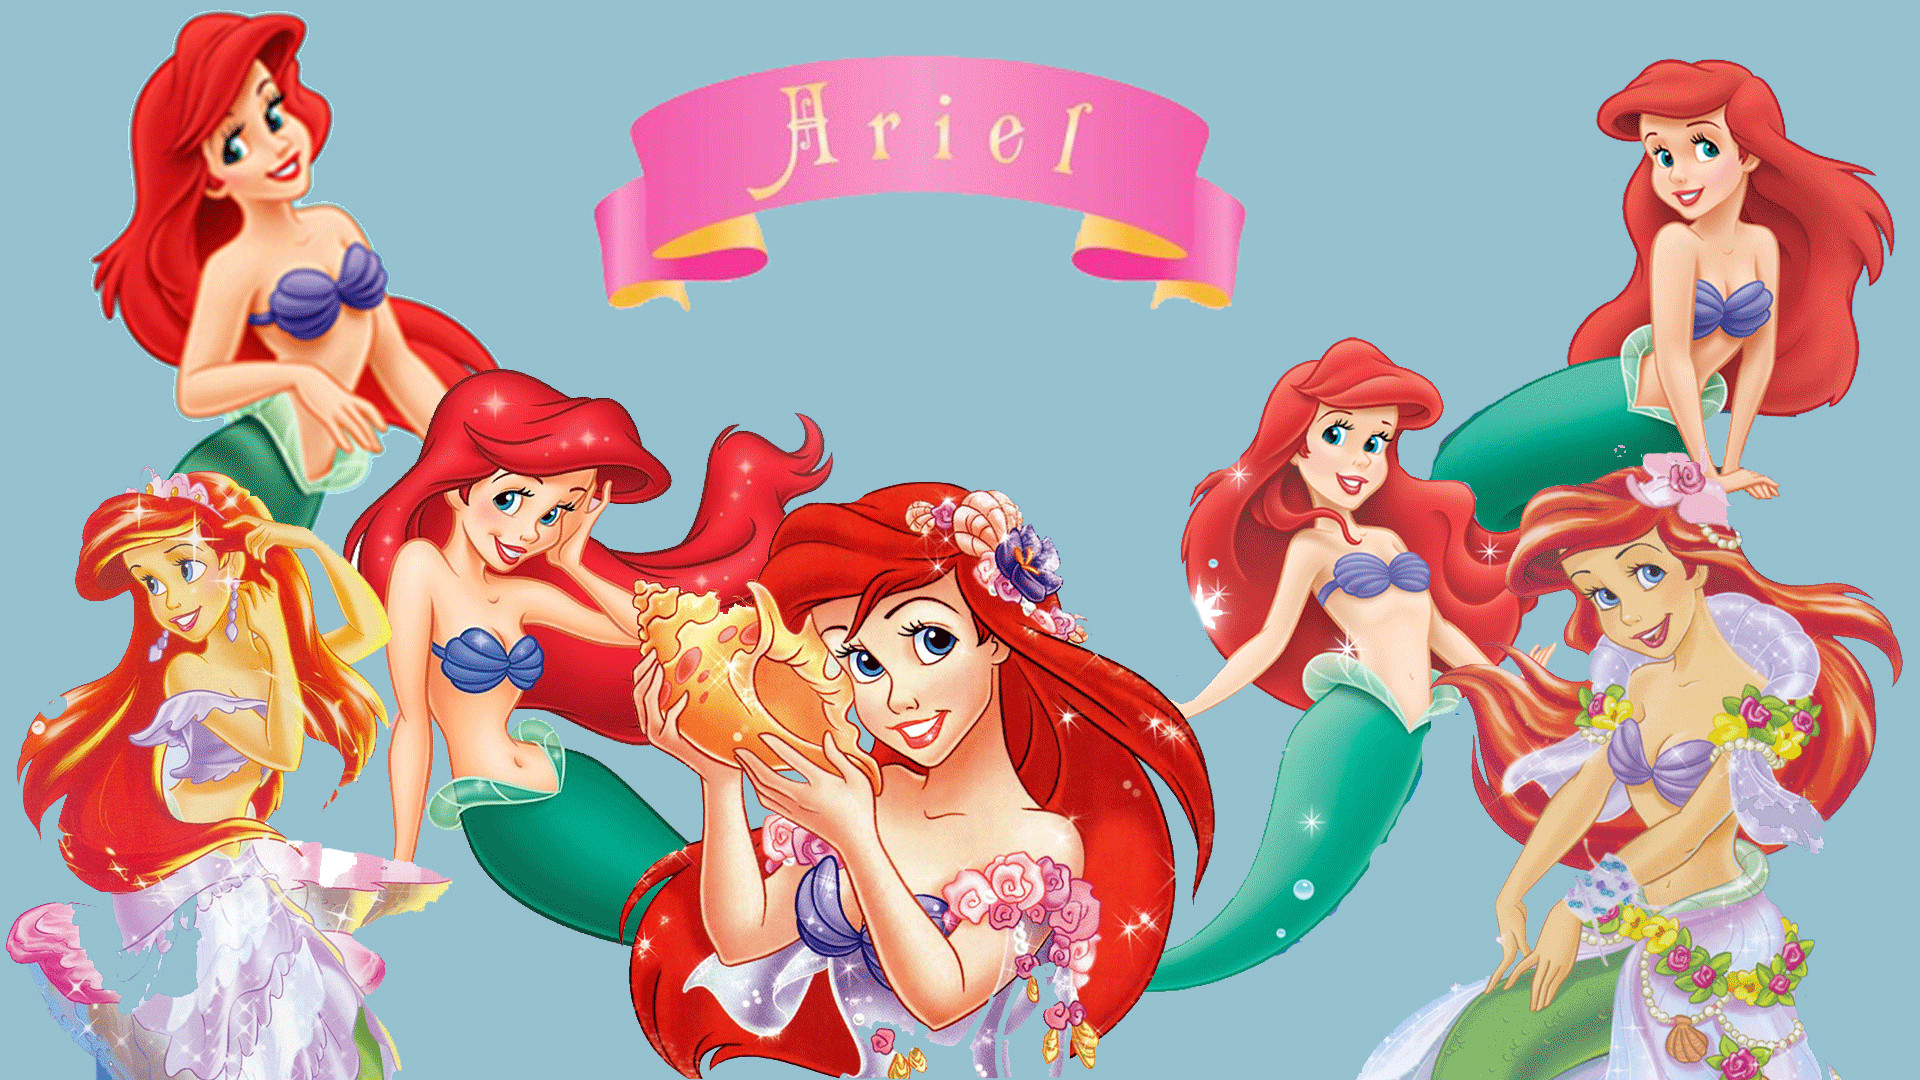 Princess Ariel Disney Princess Wallpaper Princess Ariel Pinterest Ariel, Wallpaper and Hd wallpaper